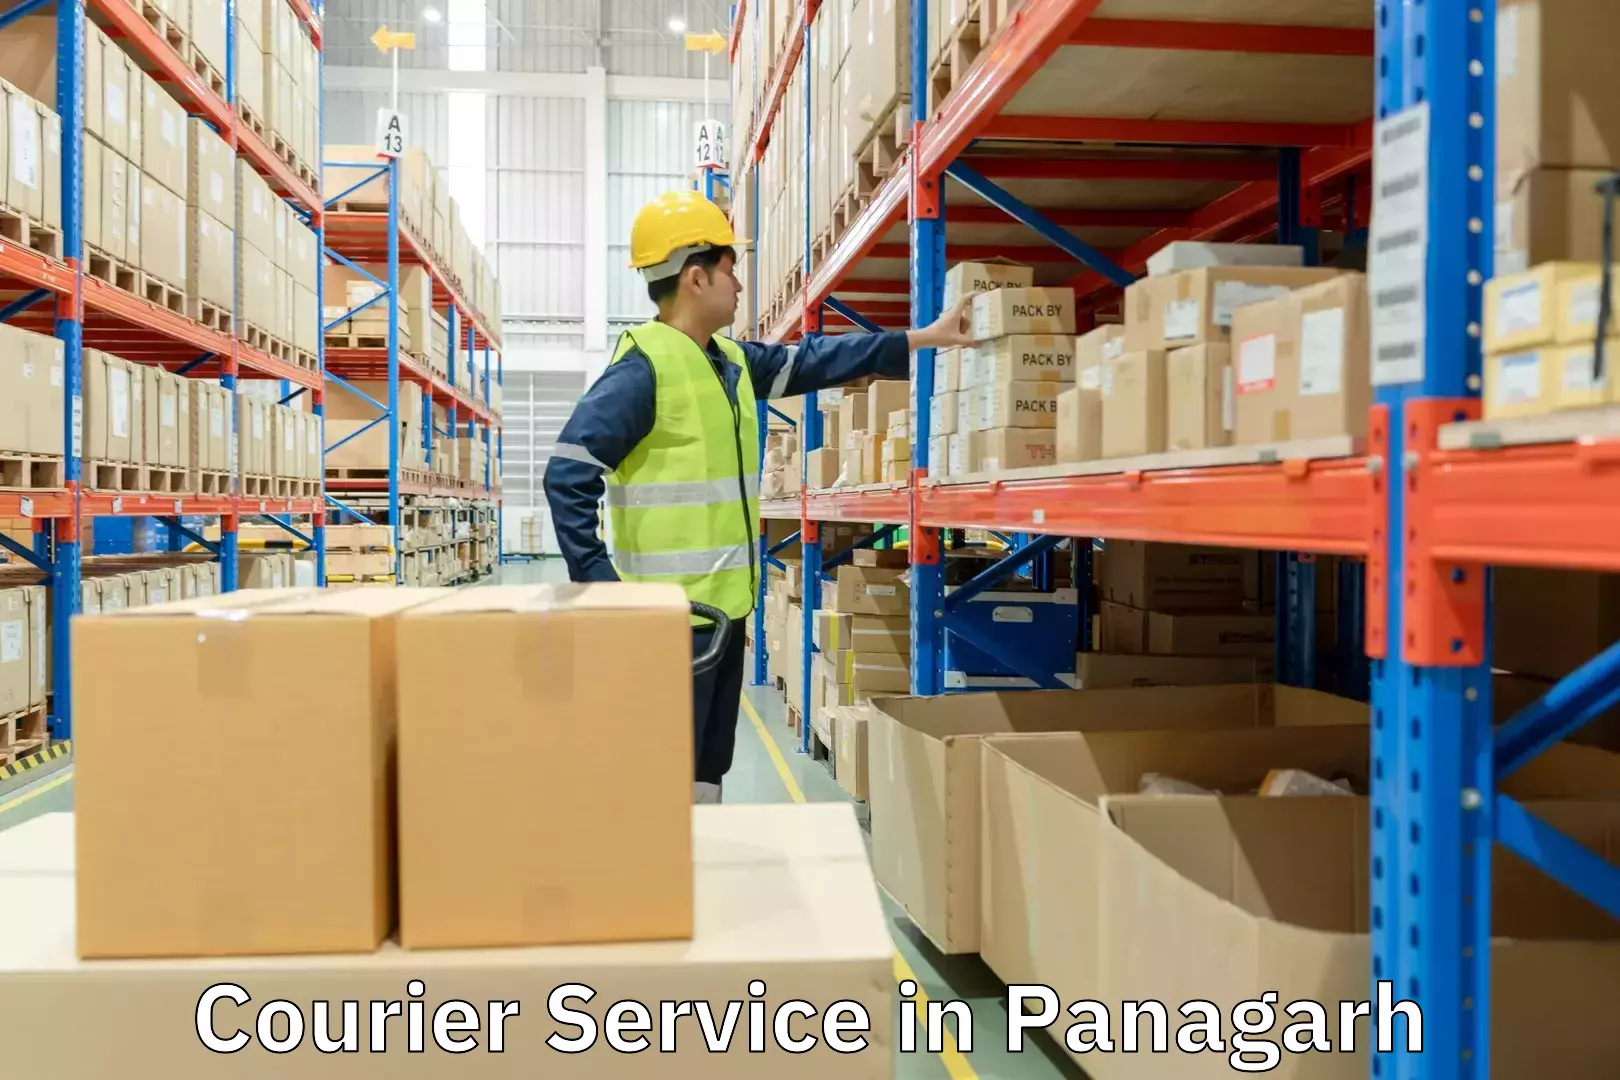 Innovative shipping solutions in Panagarh